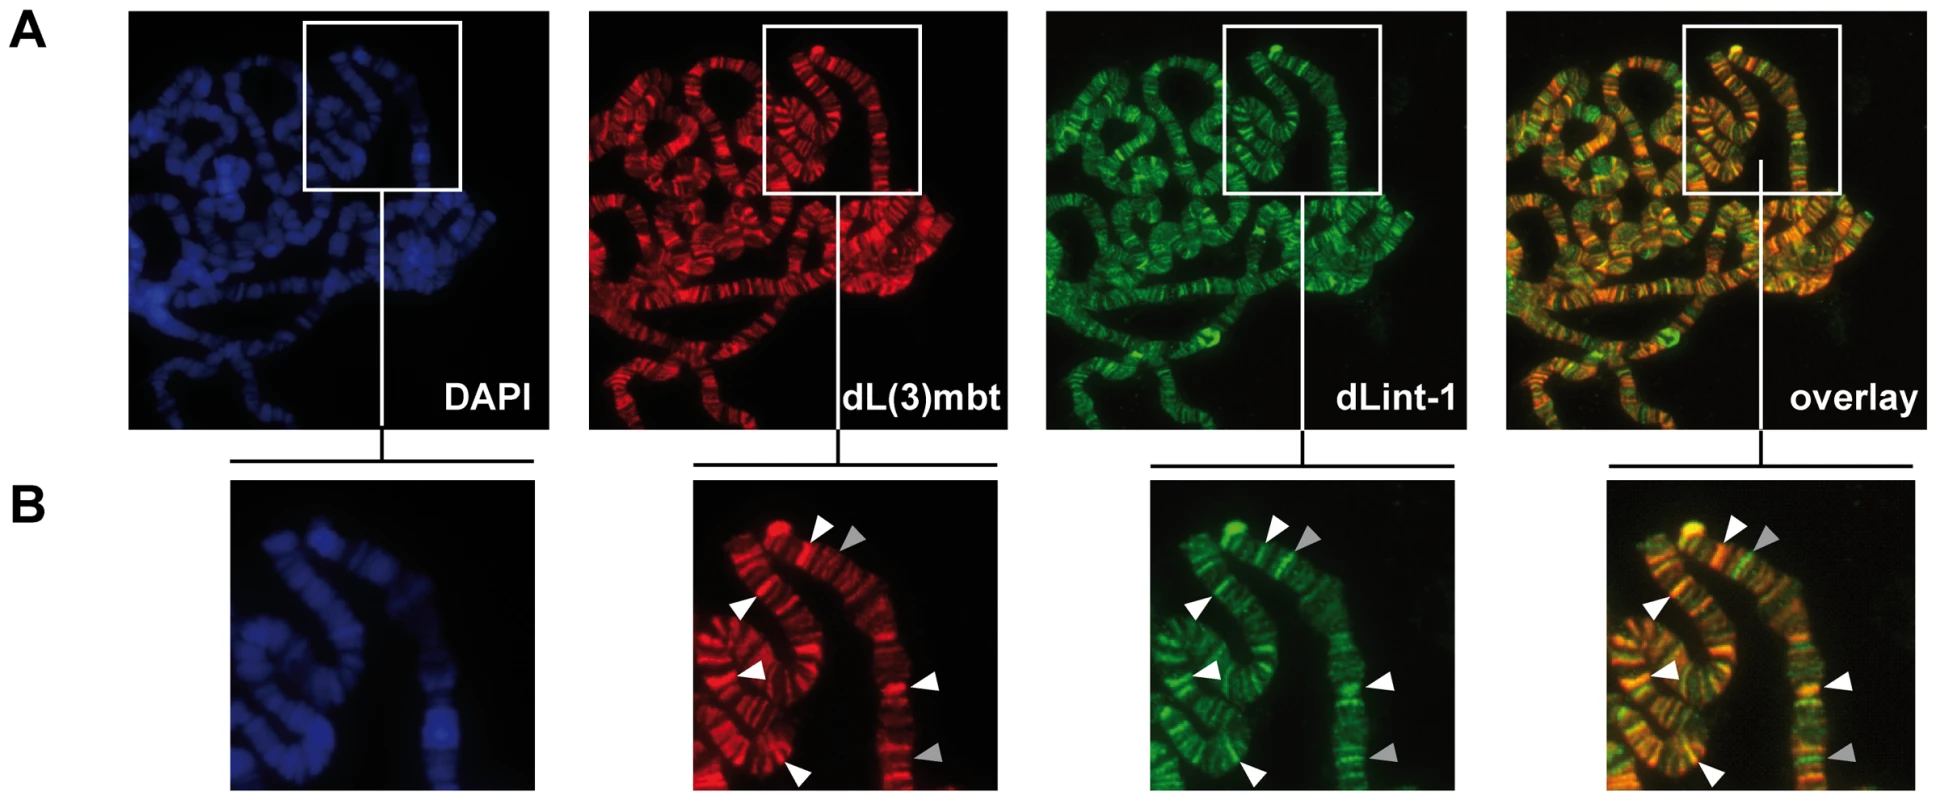 dL(3)mbt and dLint-1 colocalise on polytene chromosomes.